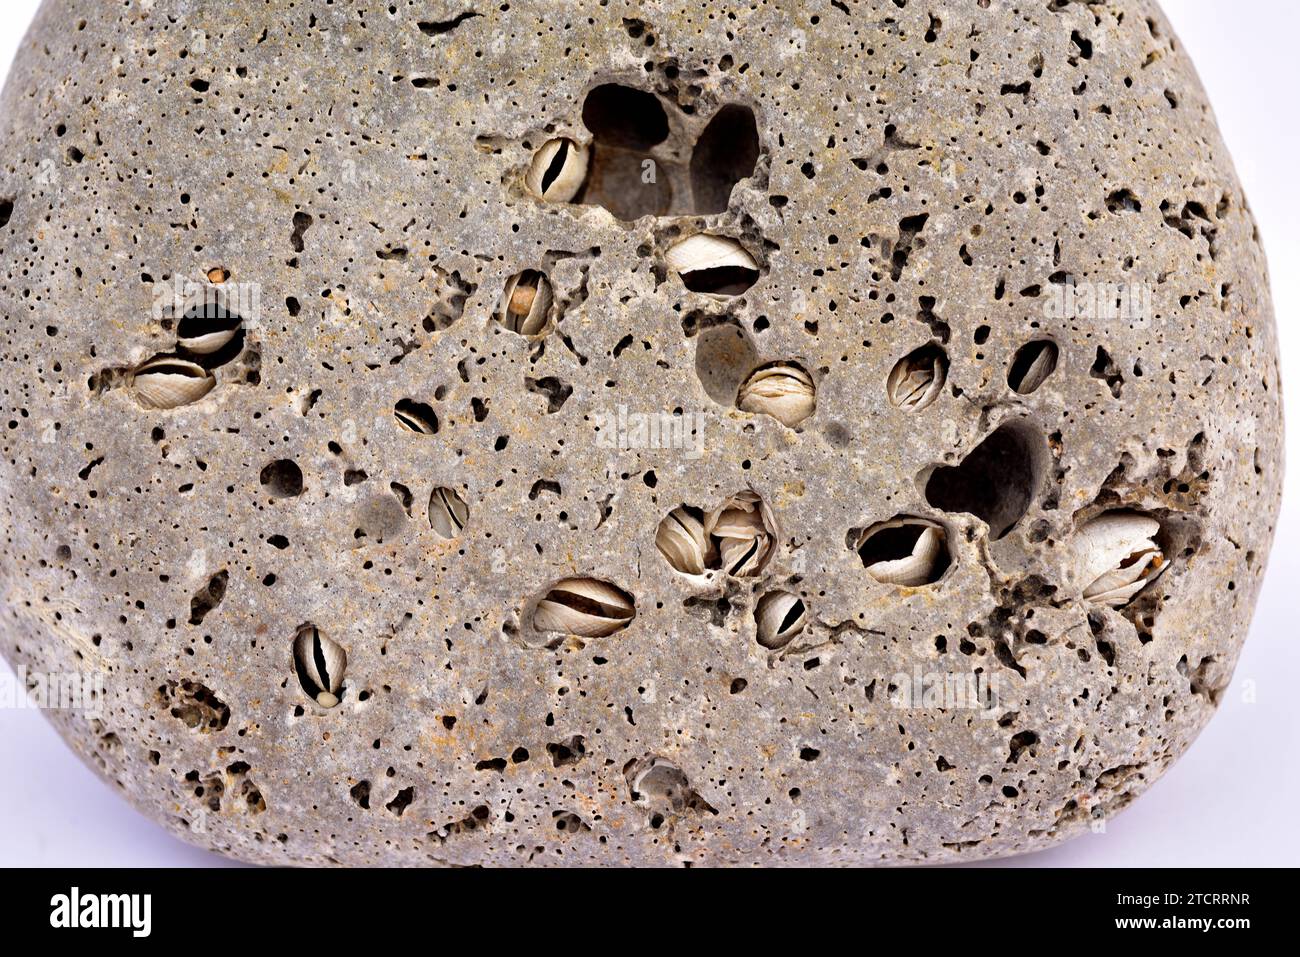 Perforated limestone rock by activity of common piddock (Pholas dactylus). This photo was taken in Torredenbarra coast, Tarragona province, Catalonia, Stock Photo